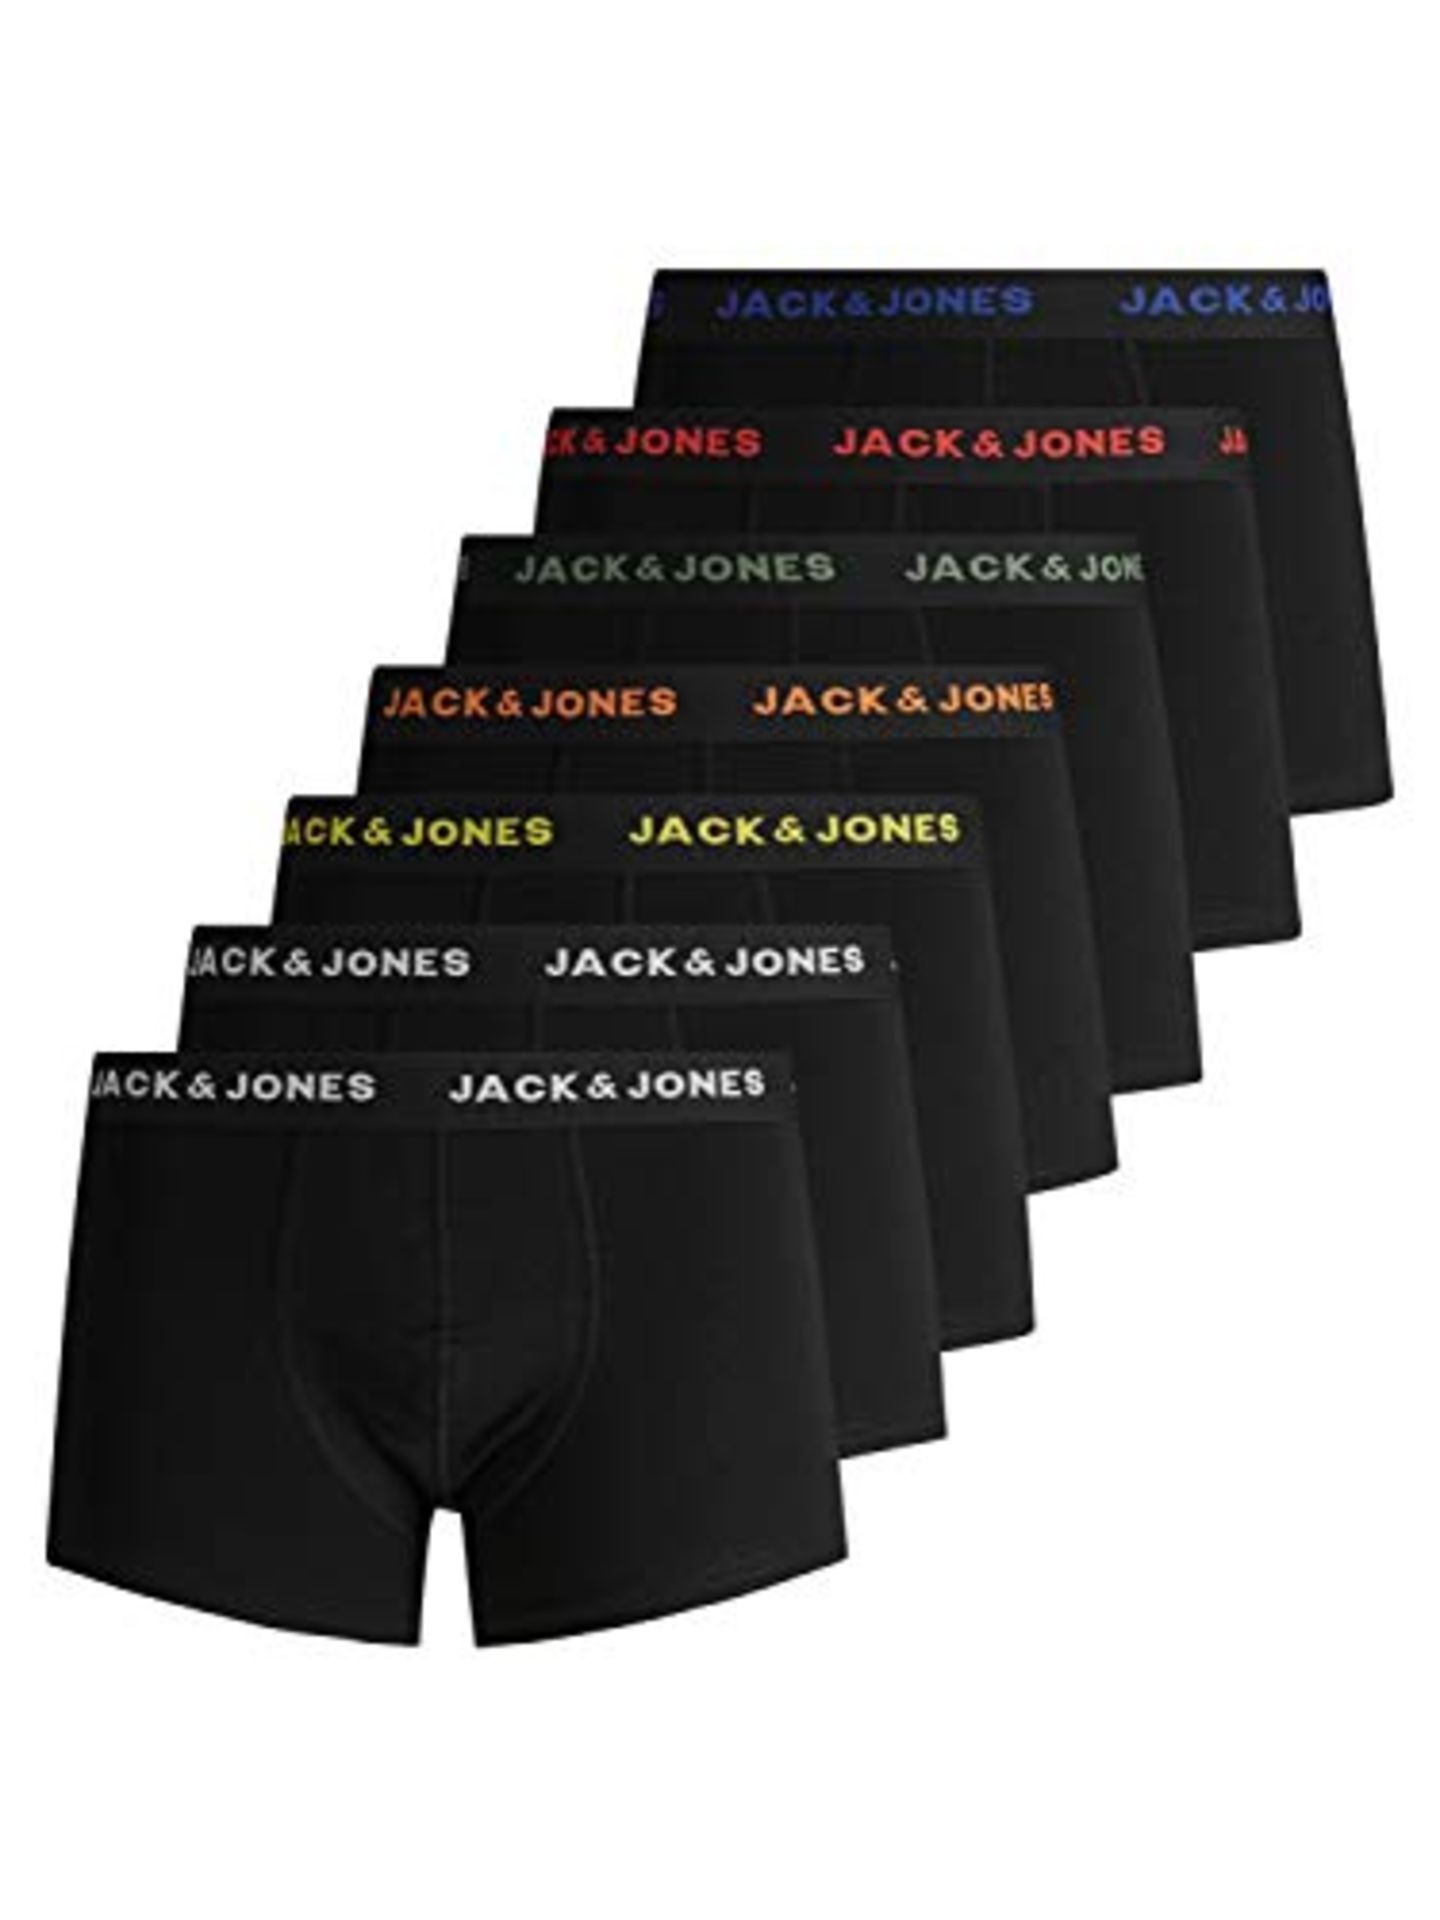 JACK & JONES Boxers Pack of 7 Boxers Black l Black l